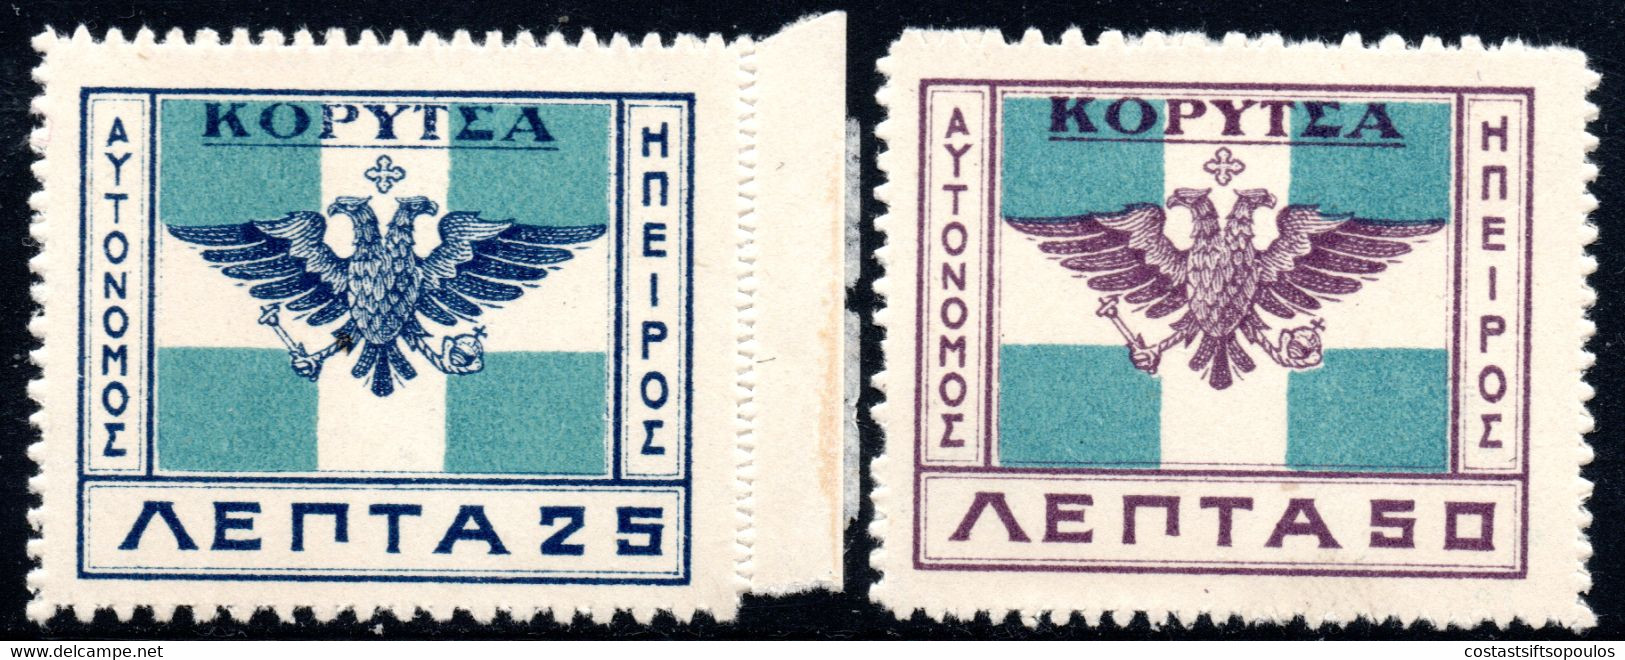 377.GREECE.ALBANIA,N.EPIRUS.1914 KORYTSA ISSUE,HELLAS 94 BH.B PERF.10 1/2  AT BOTTOM,95 AH.T PERF.10 1/2 AT TOP,MNH - North Epirus